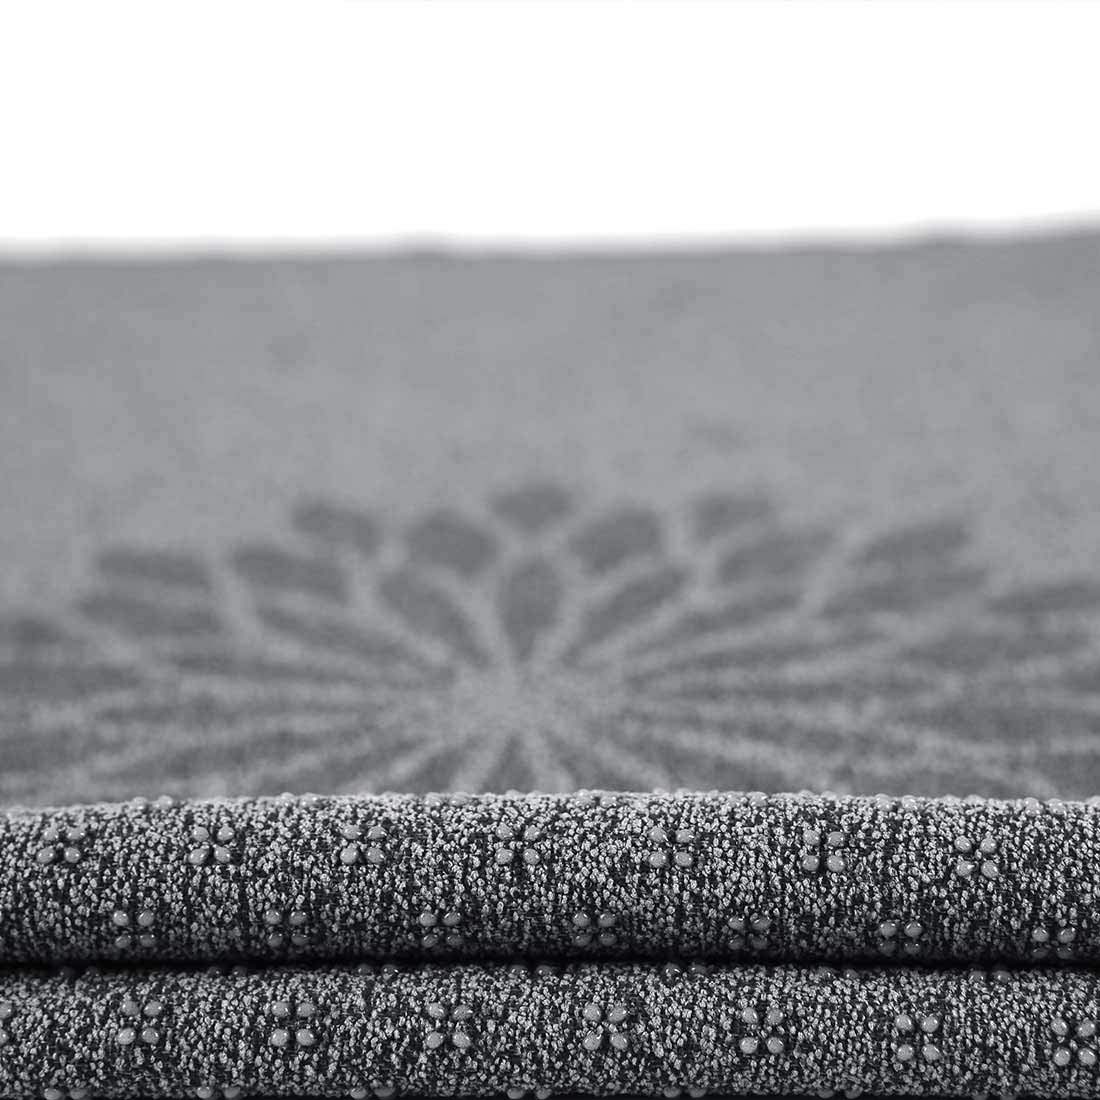 easyoga( Easy yoga ) titanium yoga mat towel hand size /YJE-007-A9 dark M gray 42.5cm (W) x 64cm (